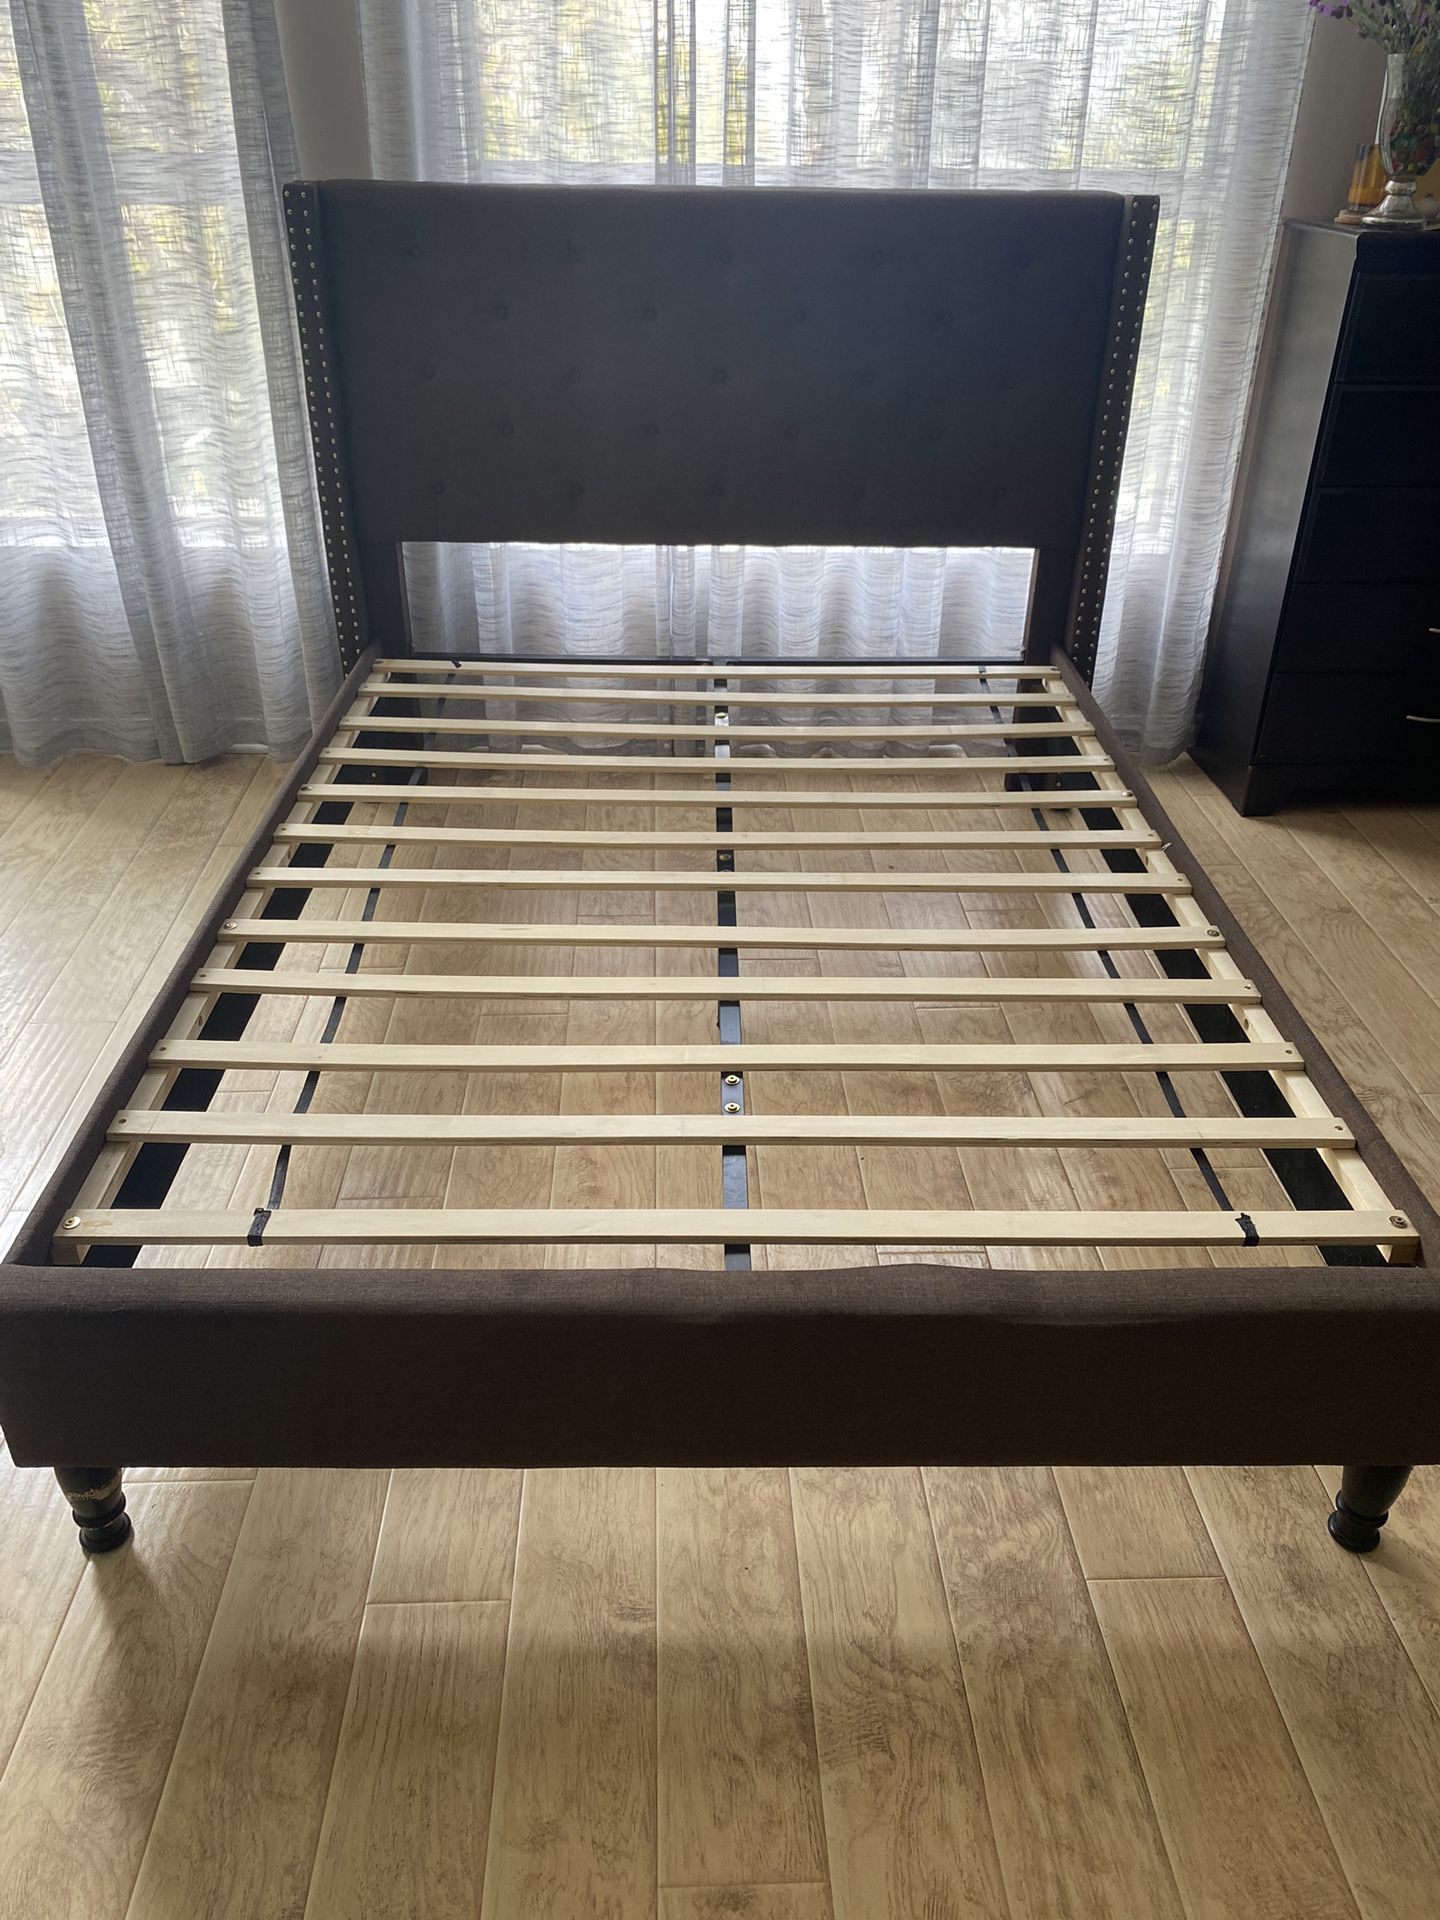 Queen Brown Bed Frame 